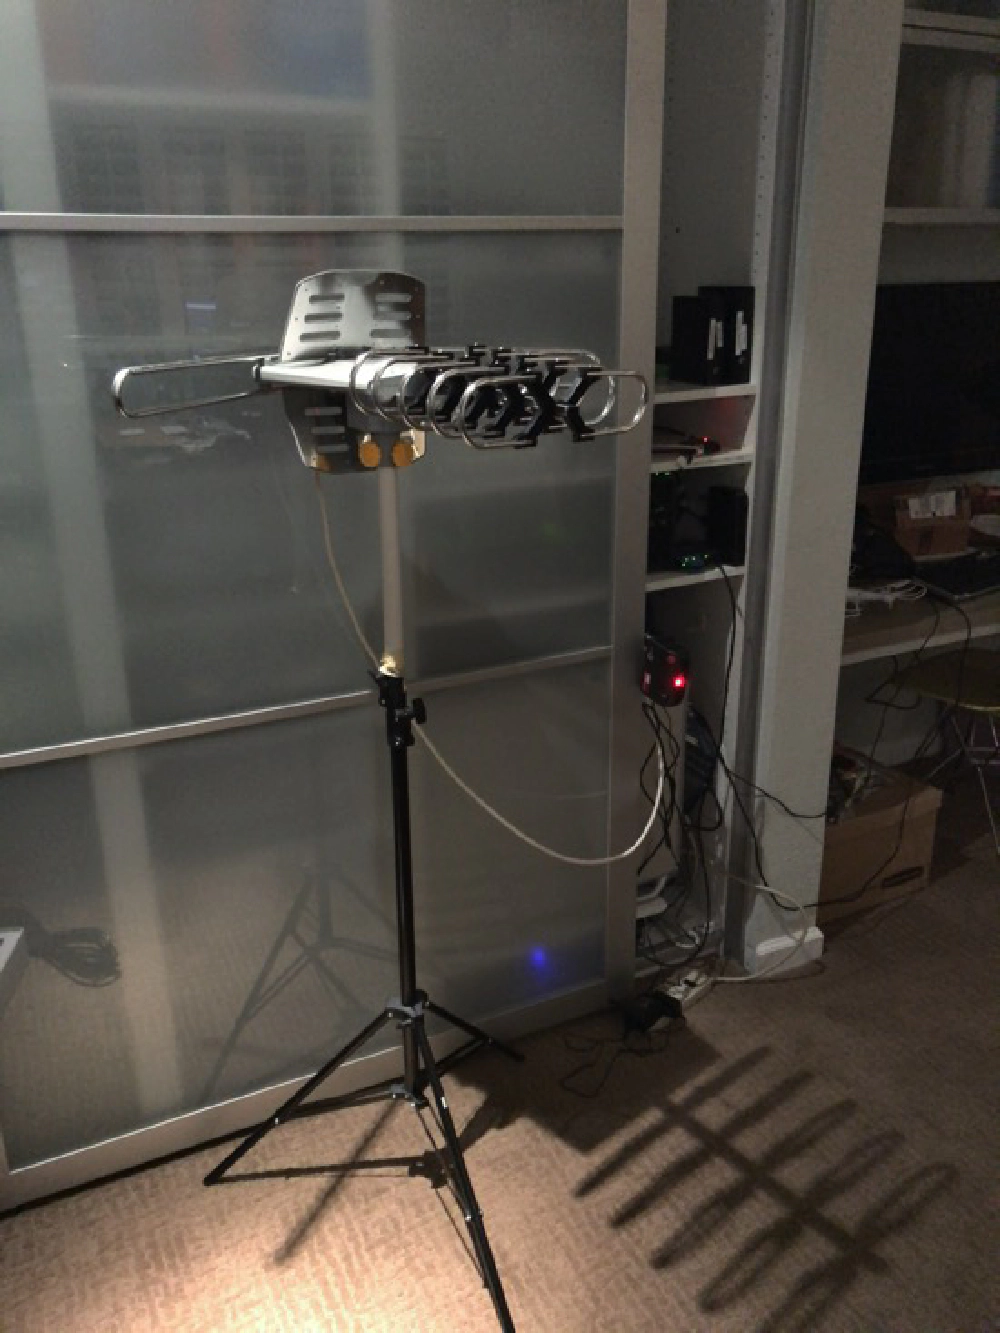 antenna setup next to my office server closet